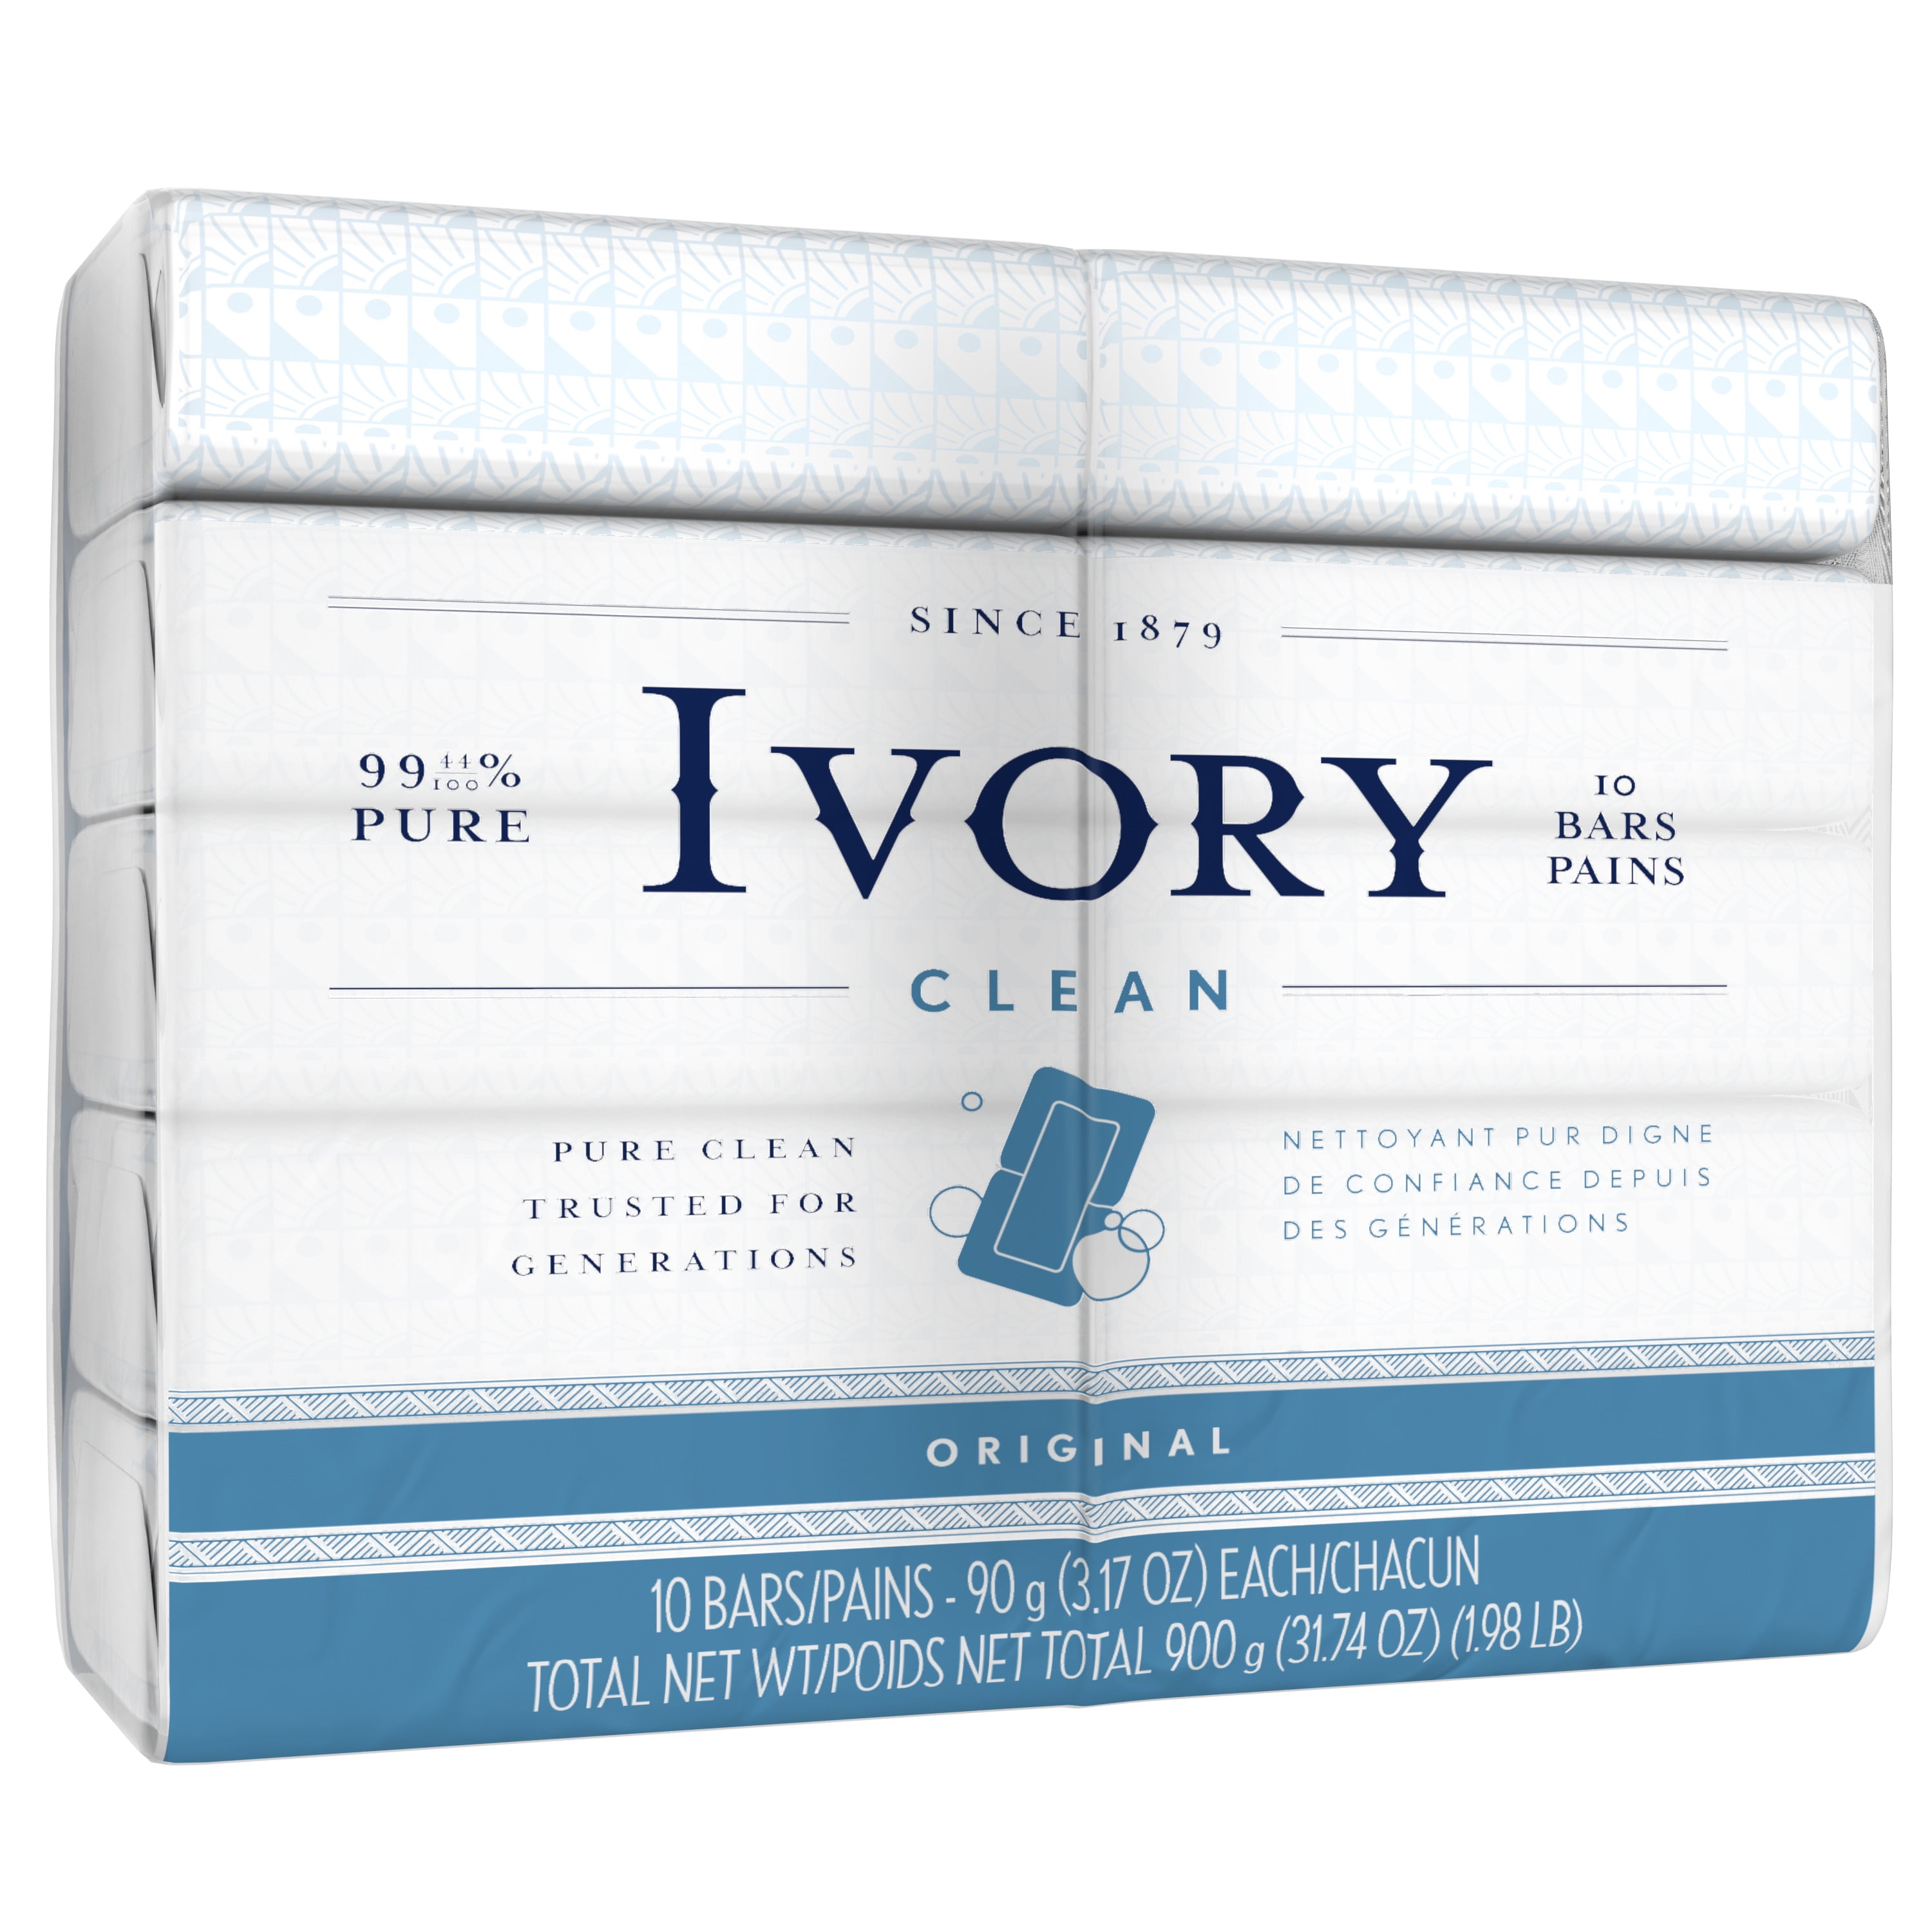 Ivory Bar Soap Original Scent 3.17oz, 10 count - Walmart.com